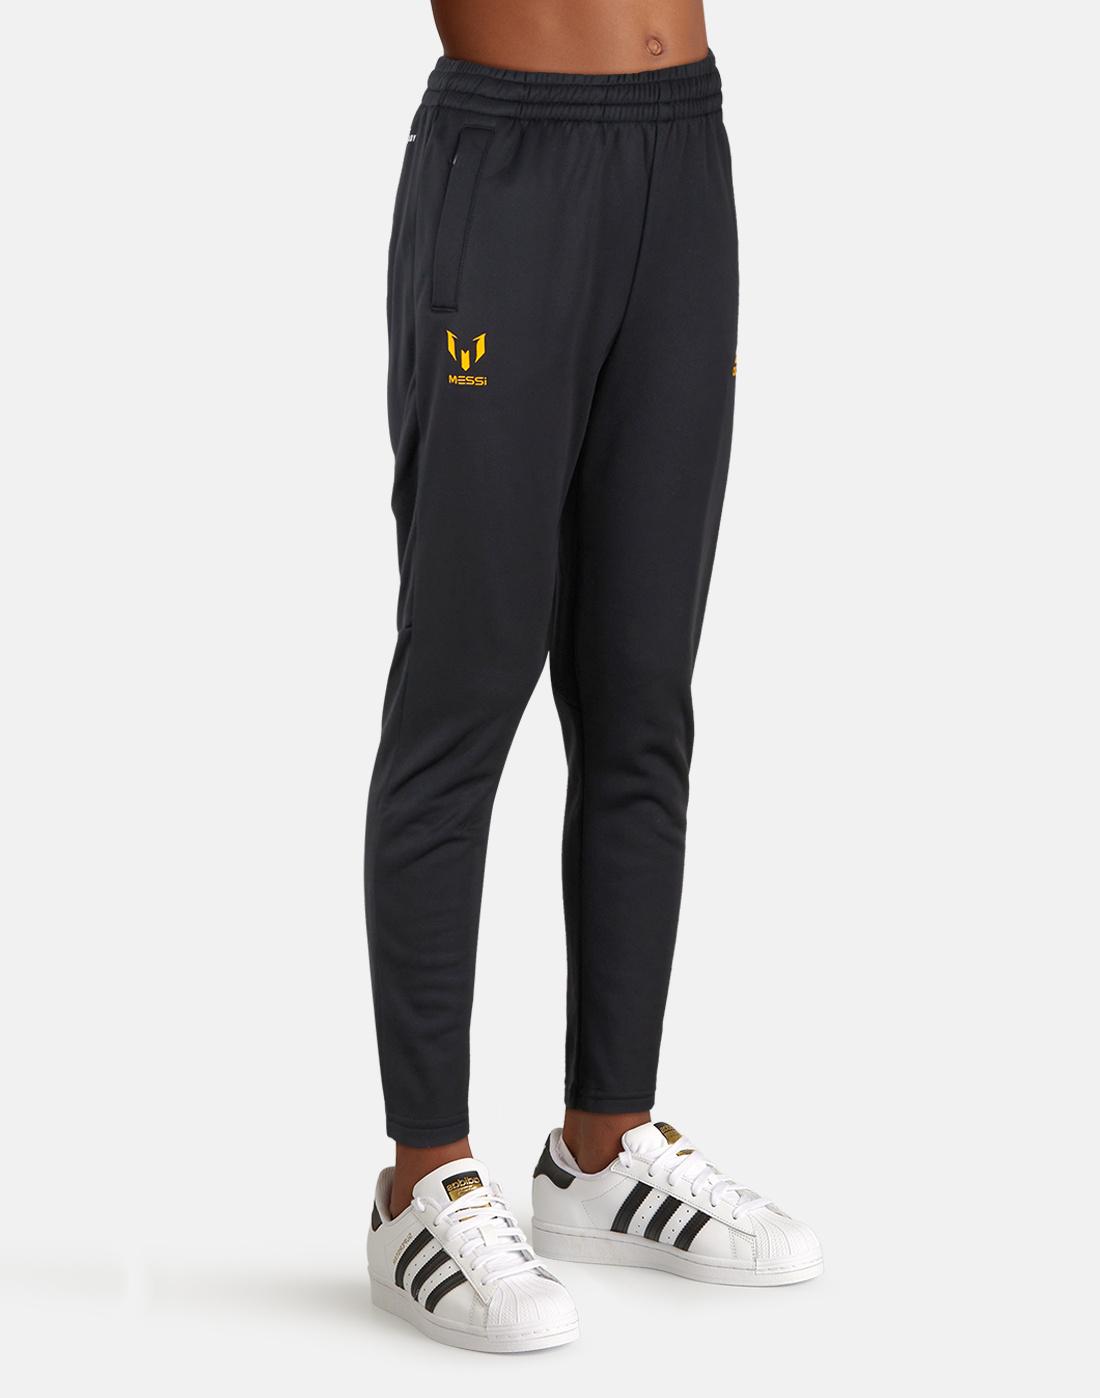 Adidas F50 Pants for men | Soccer pants, Track pants, Soccer shop